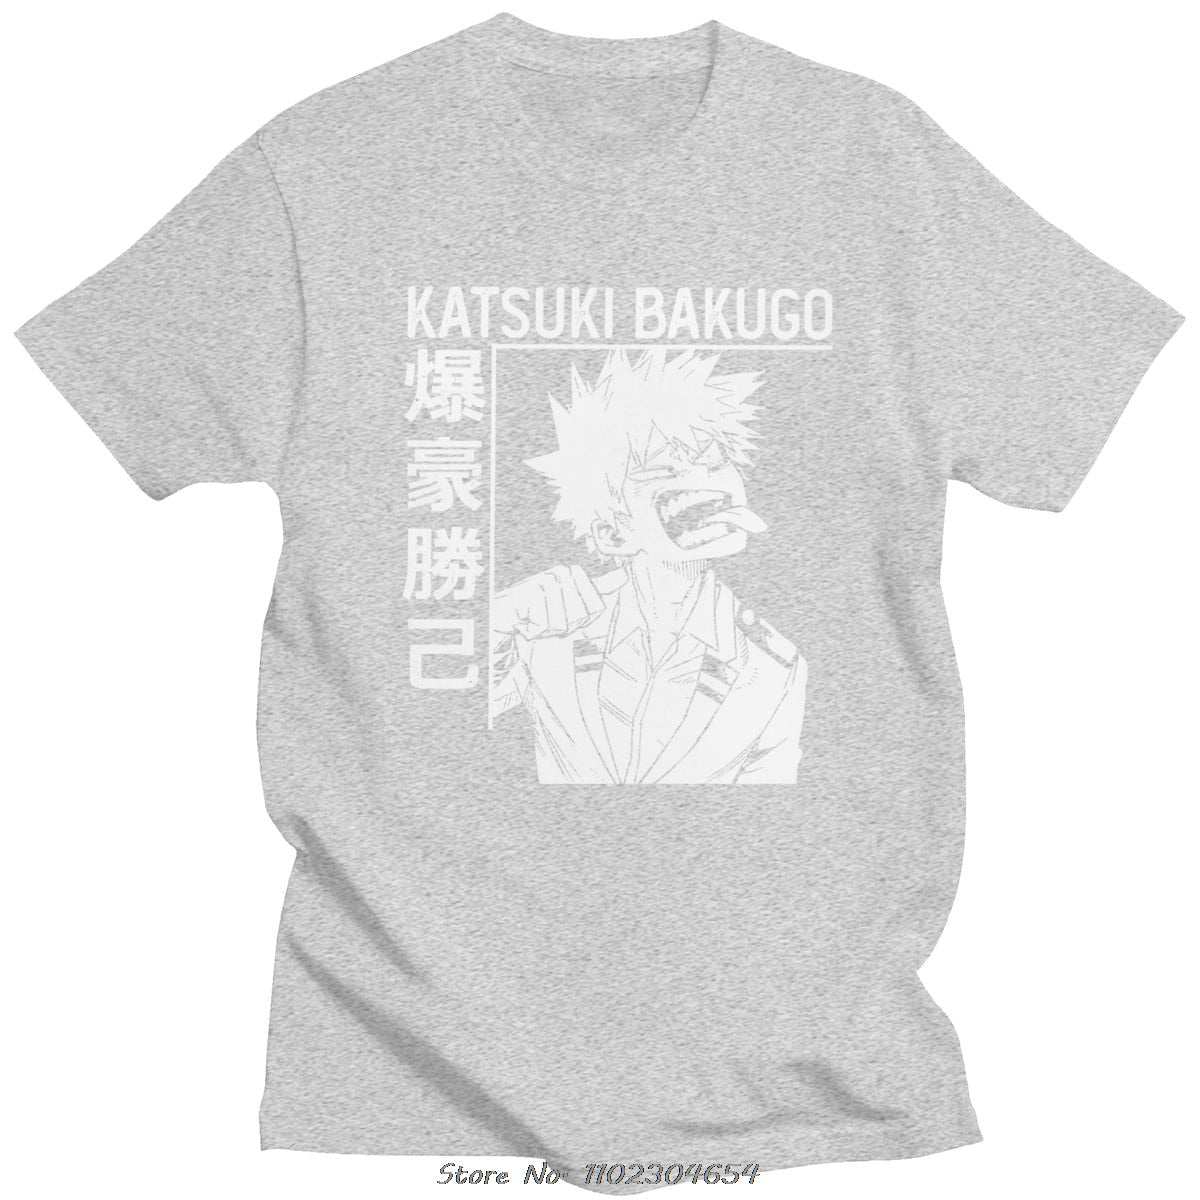 My Hero Academia Katsuki Bakugo Funny Graphic T-Shirt